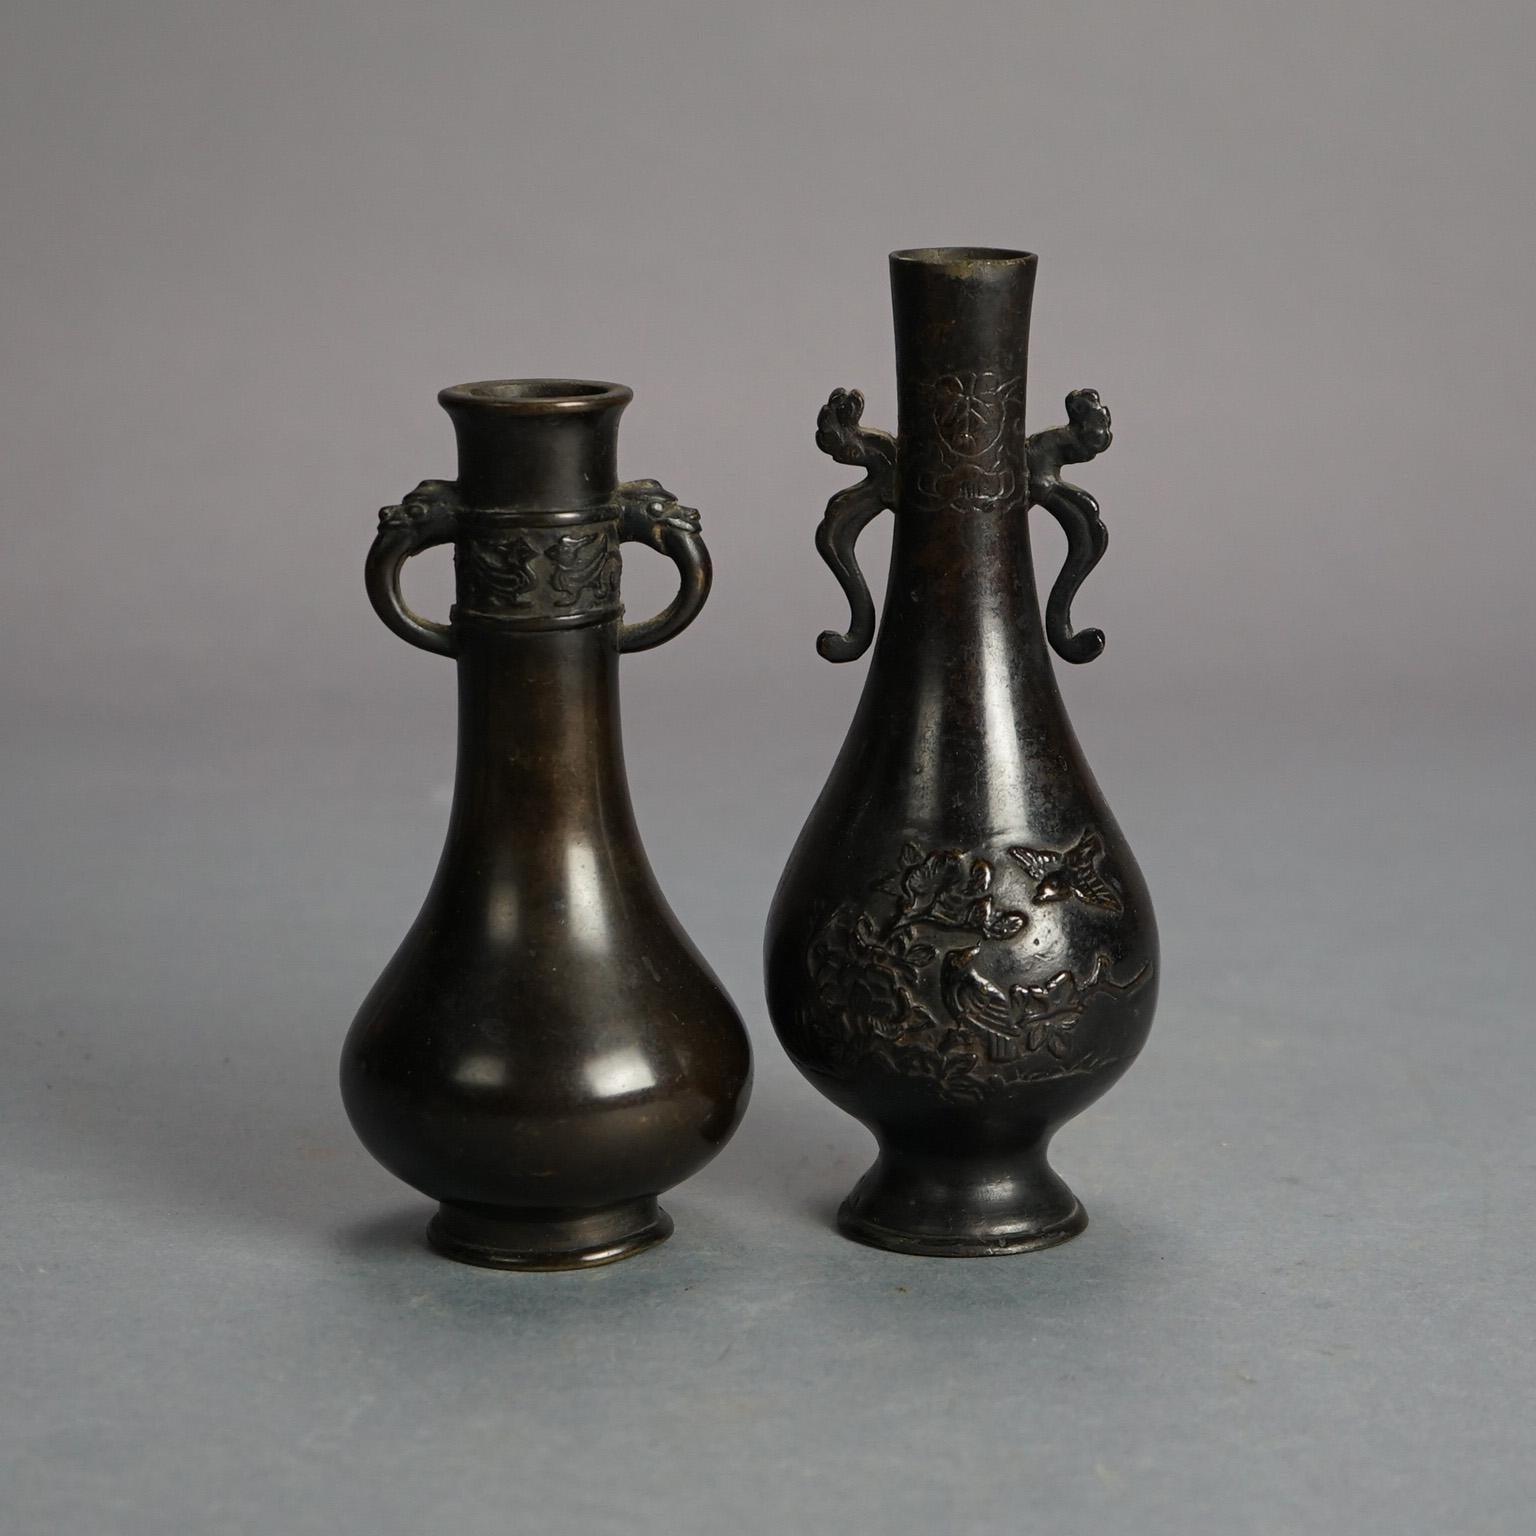 Pair of Antique Japanese Meiji Double Handled Cast Bronze Vases C1920

Measures - 6.5